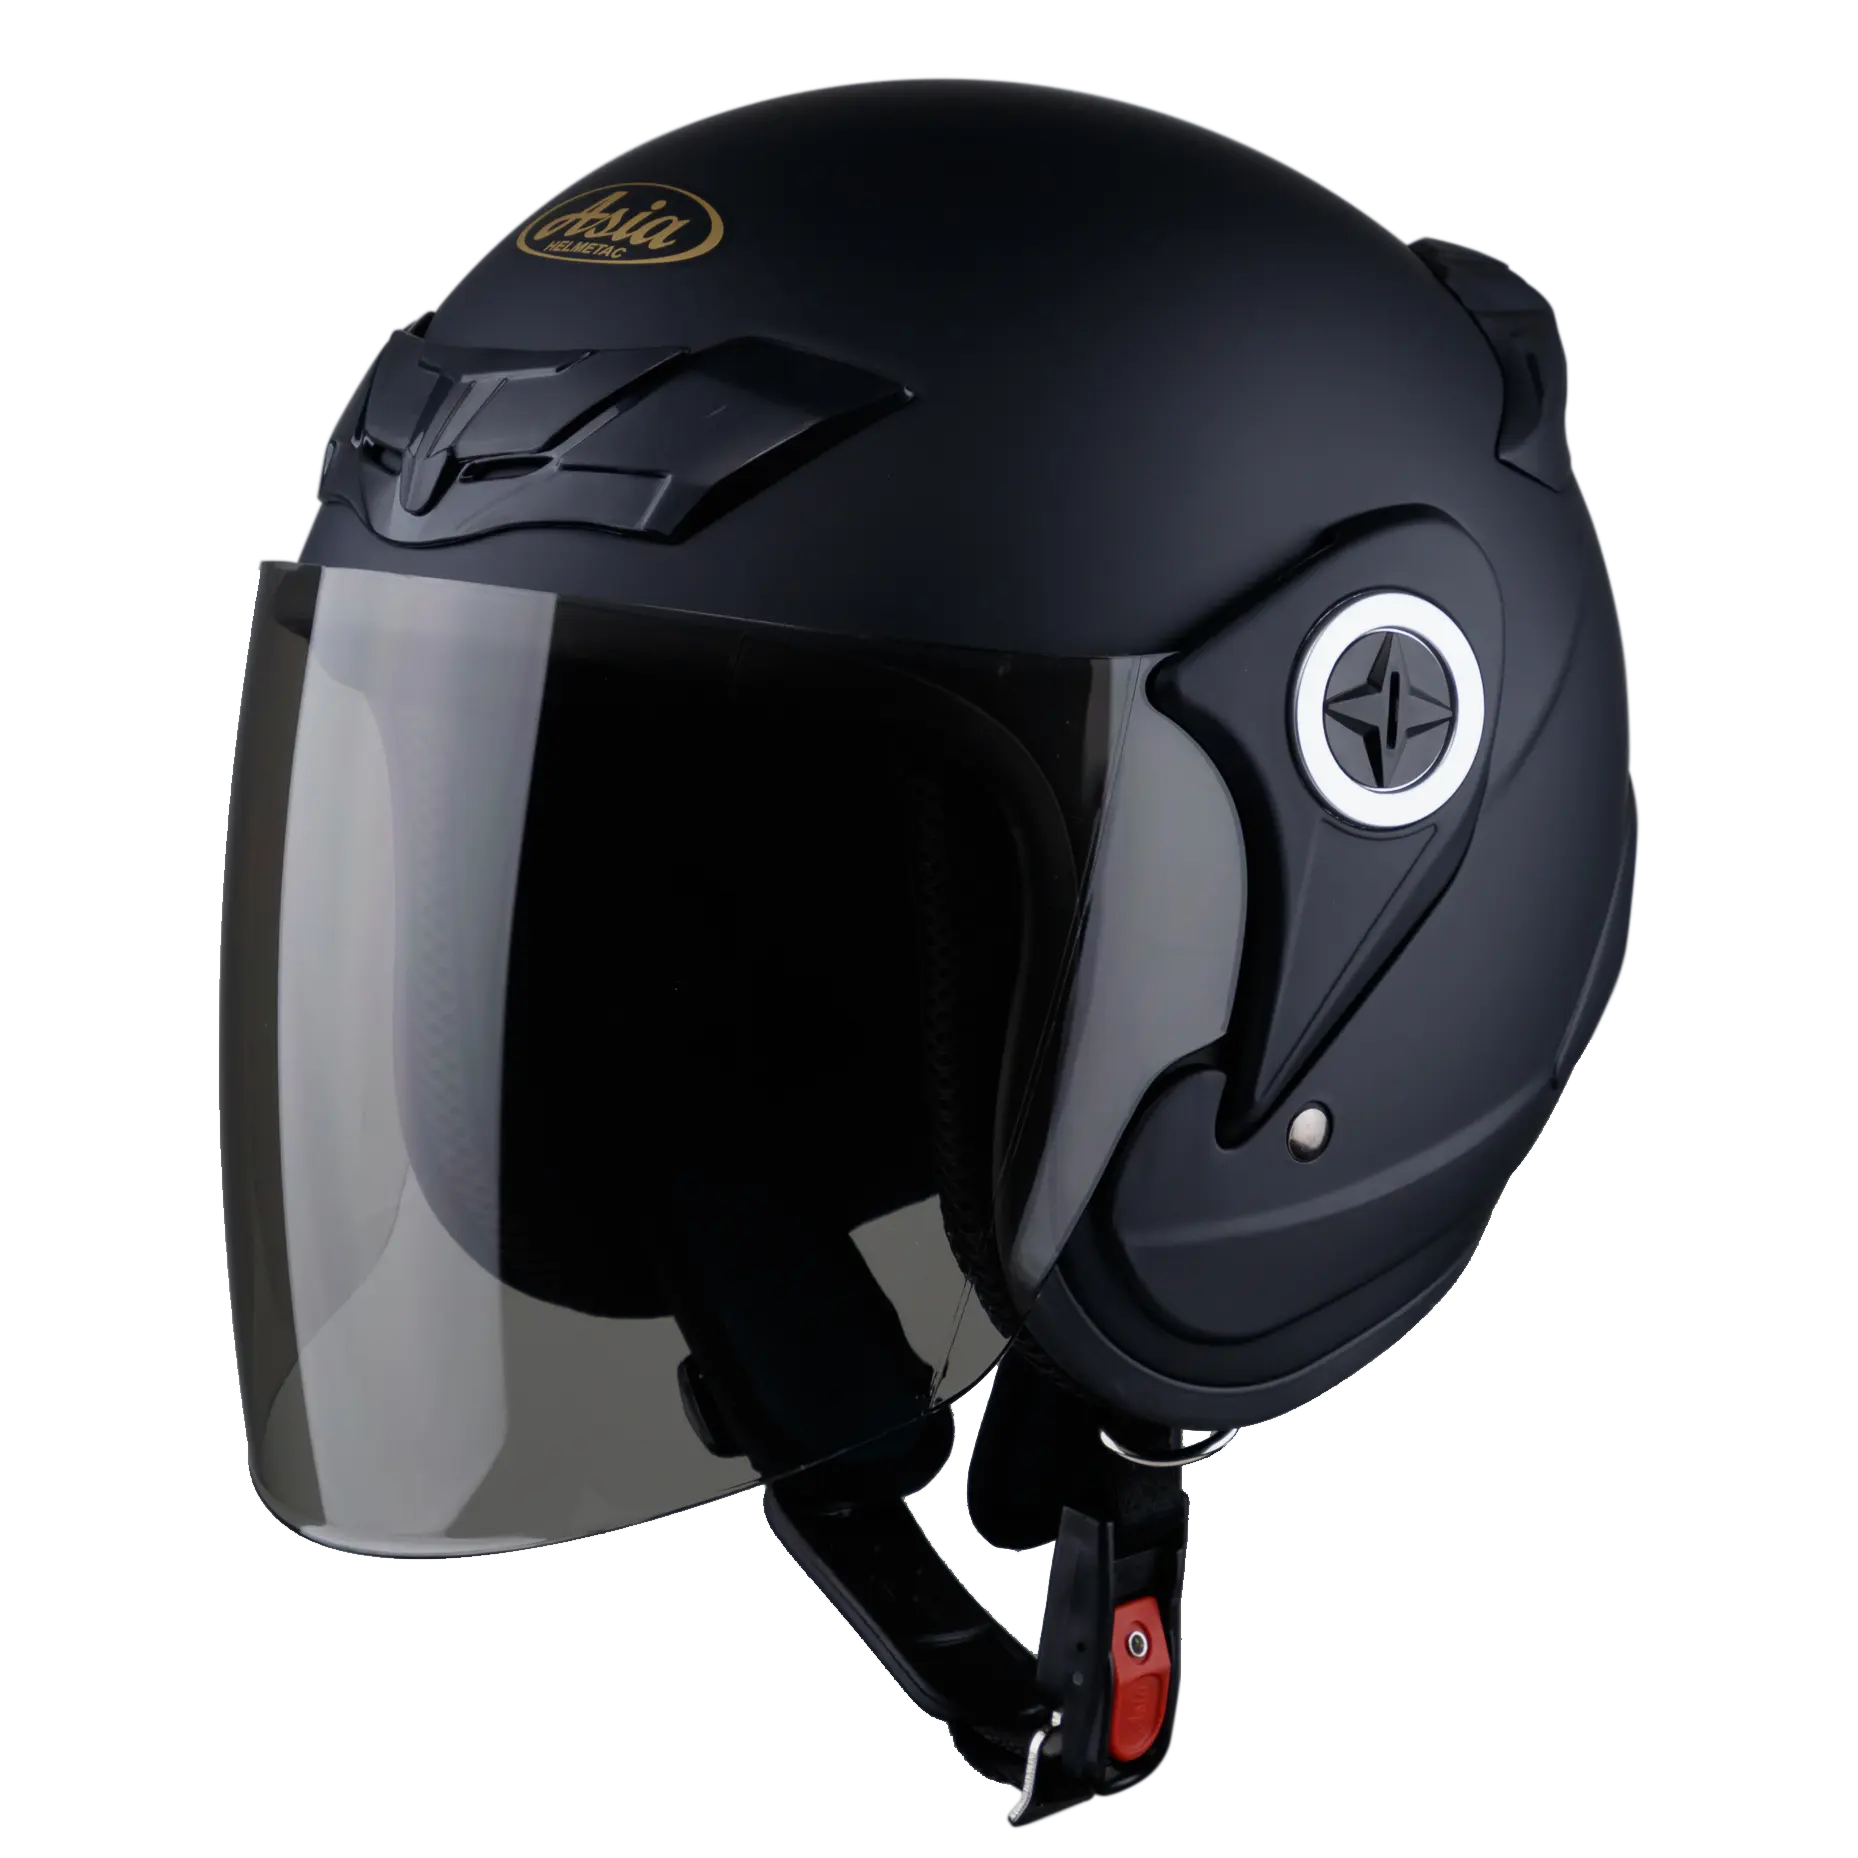 MT-168 Asia Advanced ABS con visiera casco moto Open face con DOT casco caschi moto vintage in vendita in fabbrica